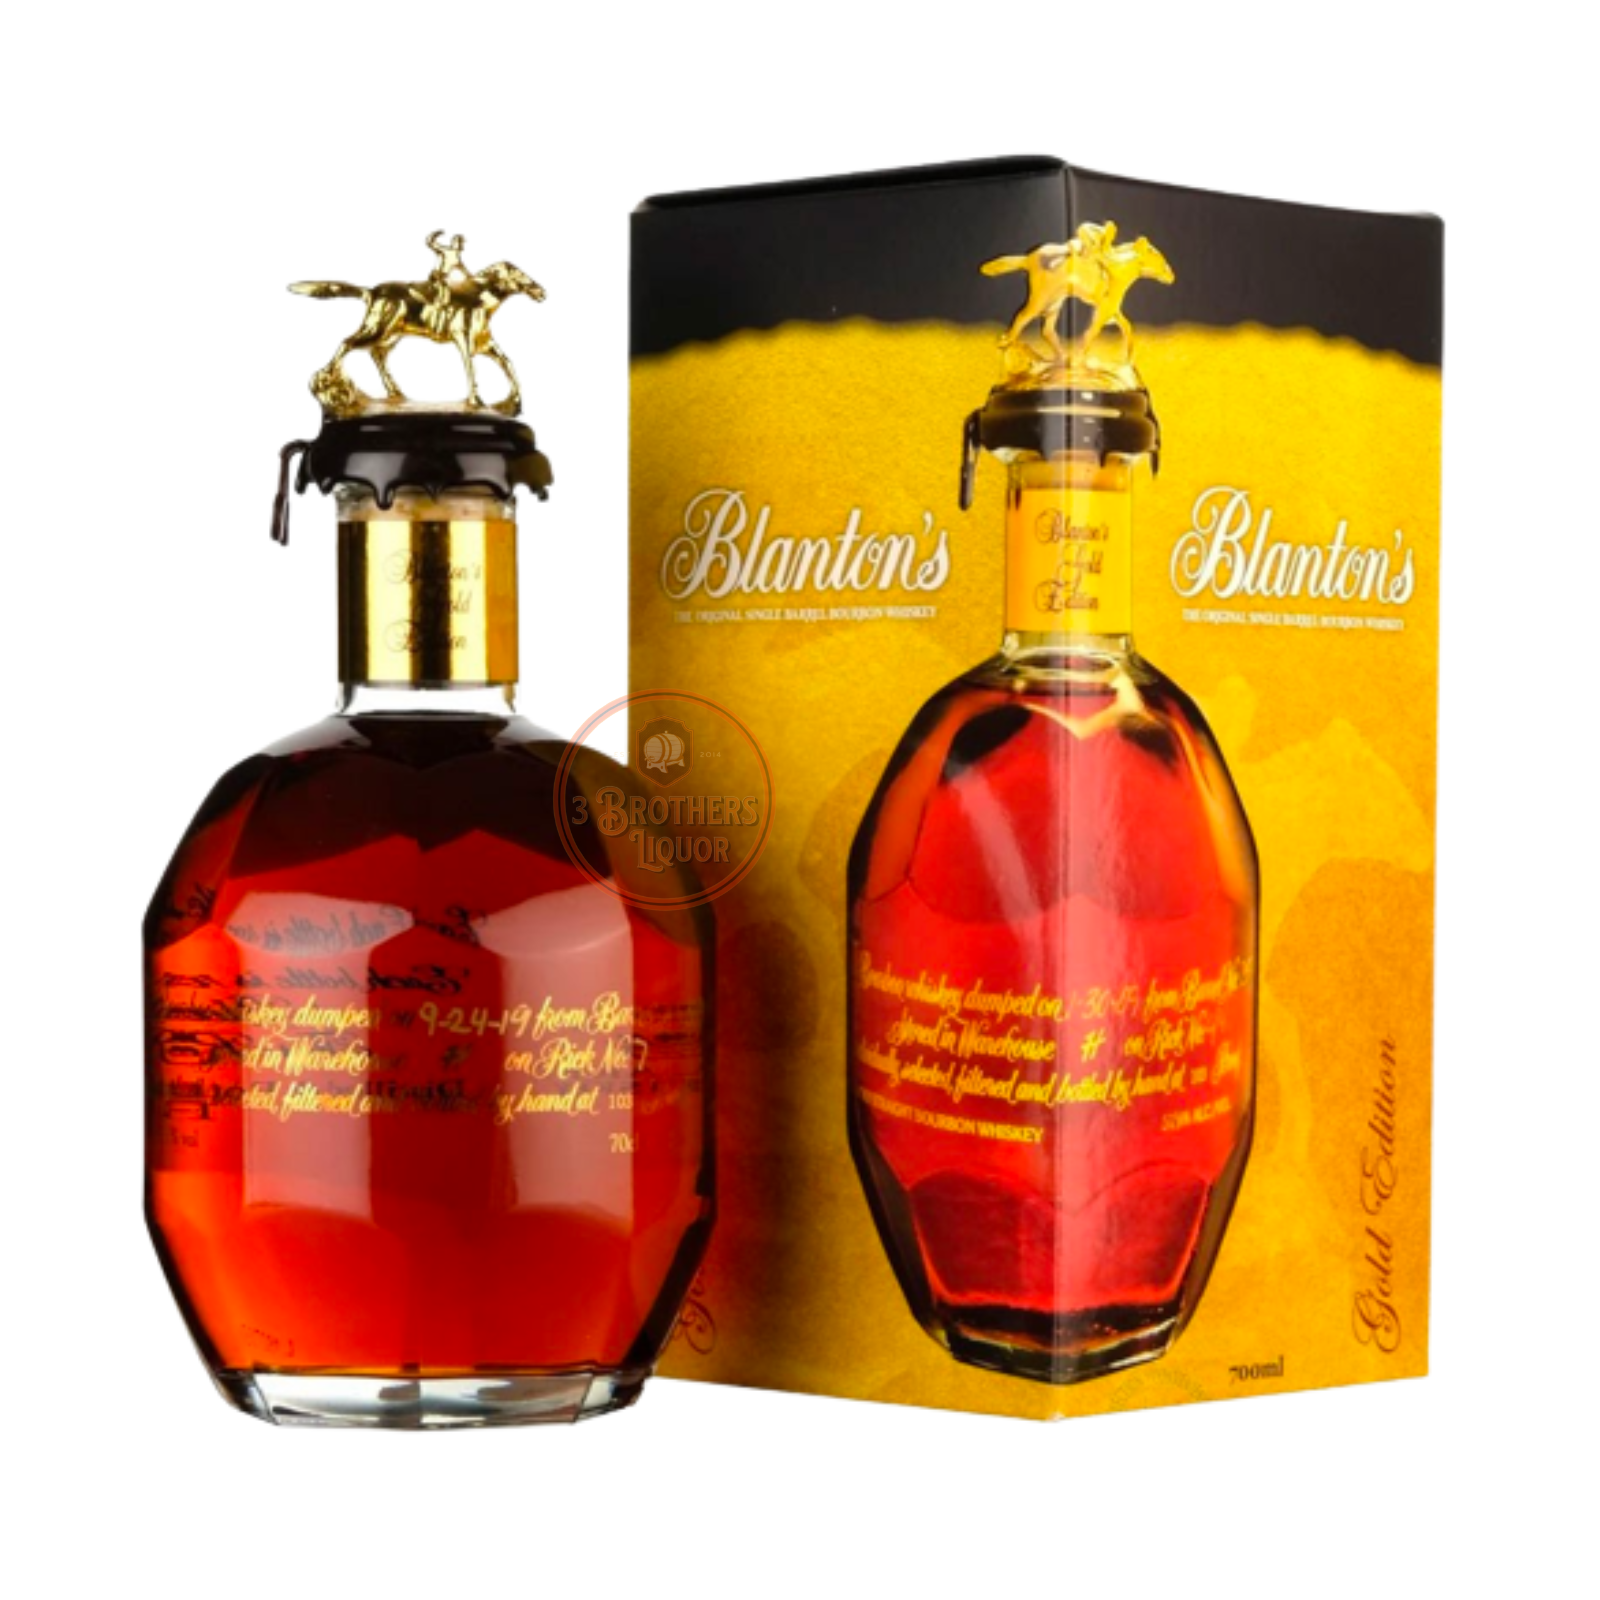 Blantons The Original Single Barrel Bourbon Whiskey Gold Edition 3brothersliquor 6092